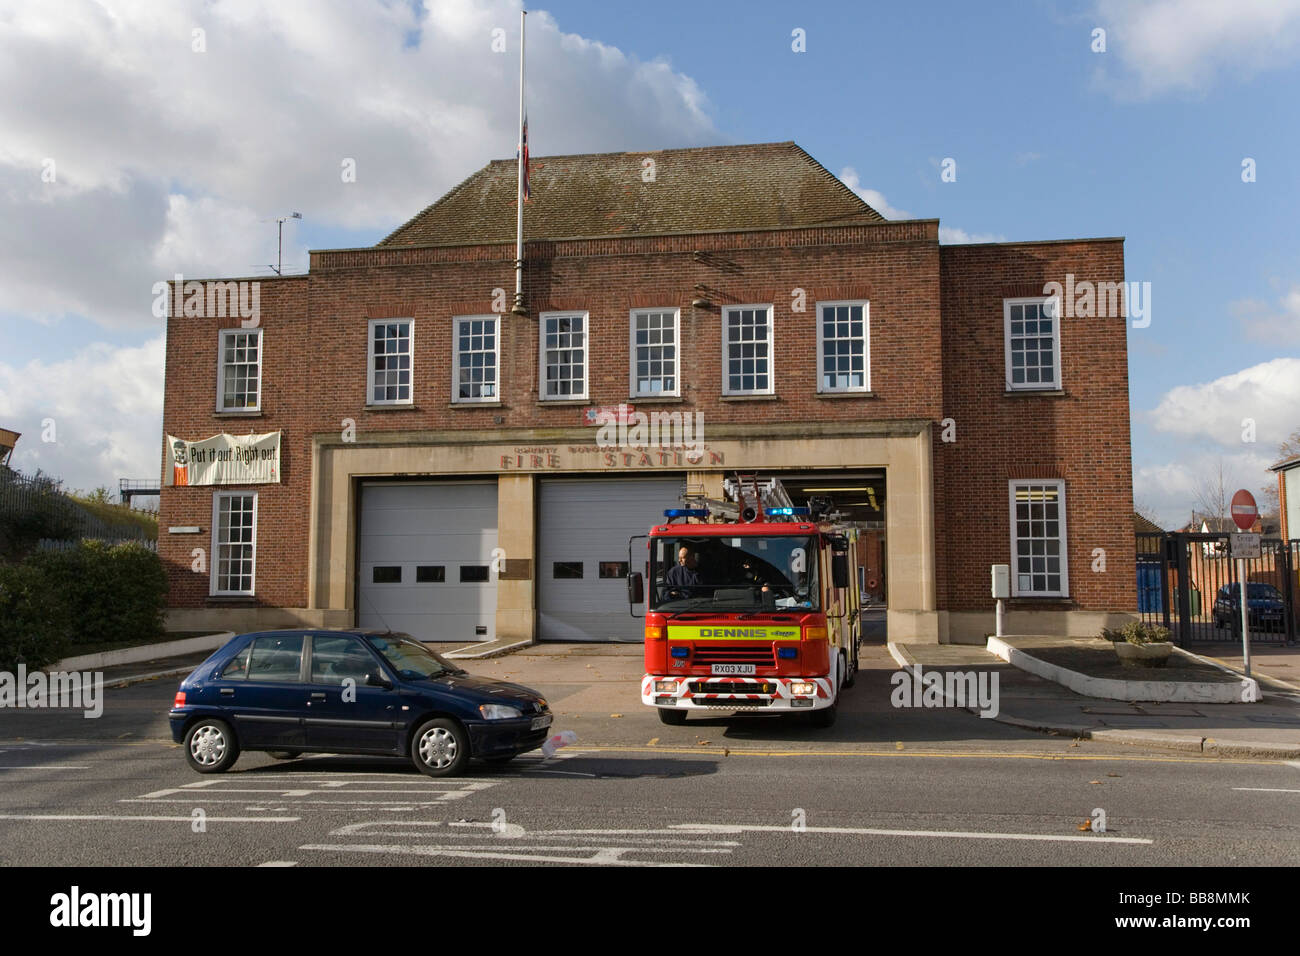 Fire engine, Fire Station, County Borough, Reading, Berkshire, UK Stock Photo